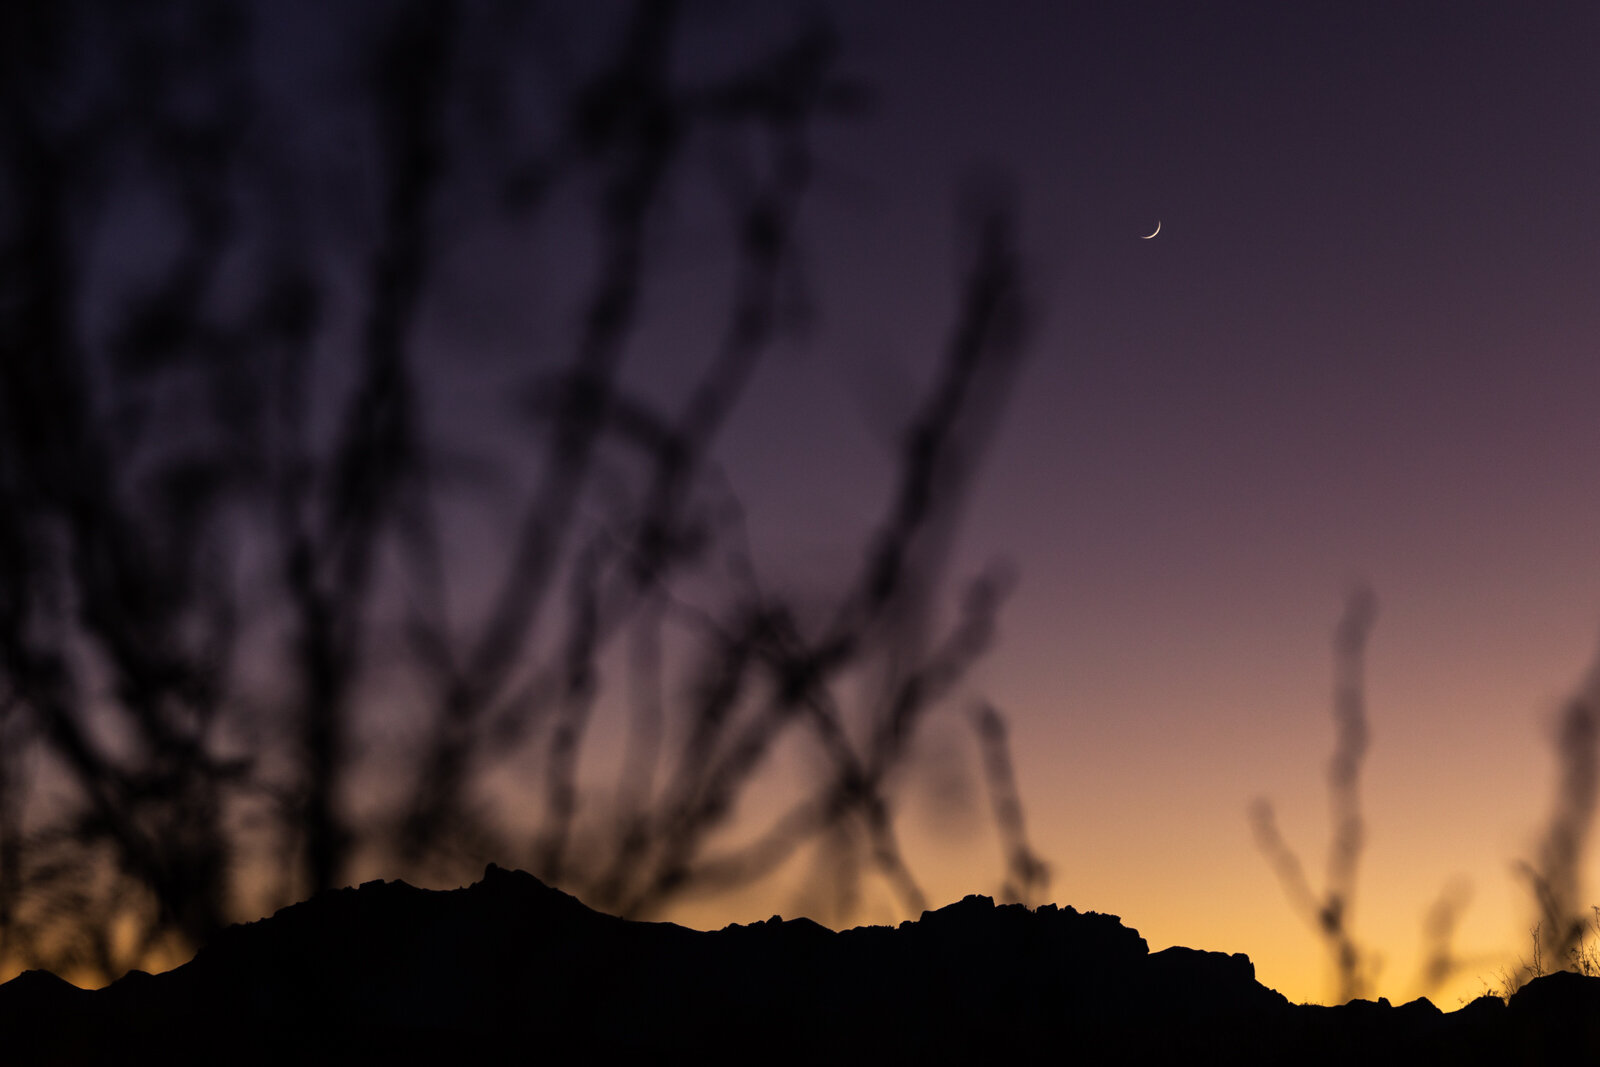  Peepin’ the crescent moon at dusk.  